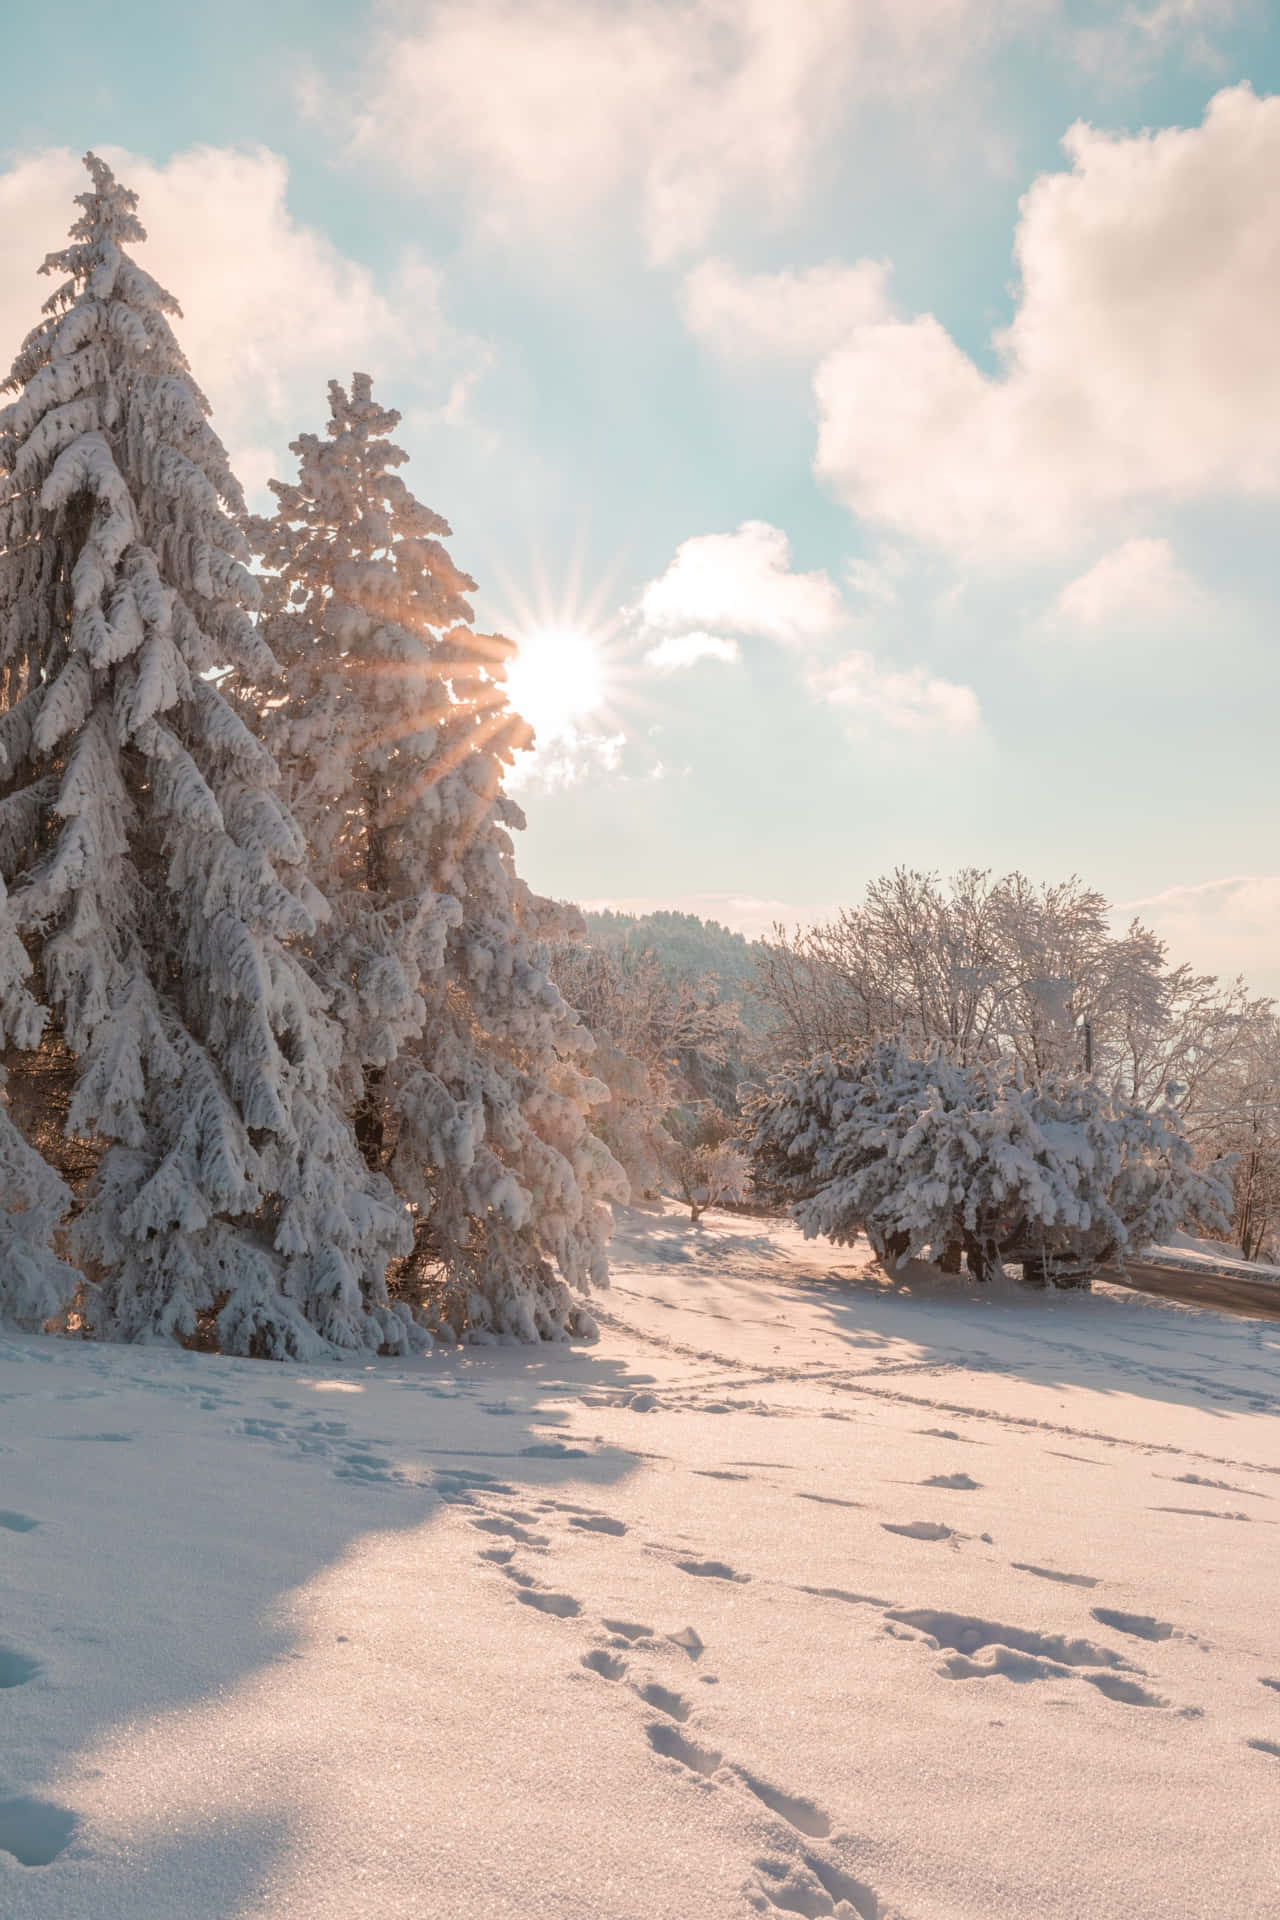 Imagemde Árvores Congeladas De Inverno.